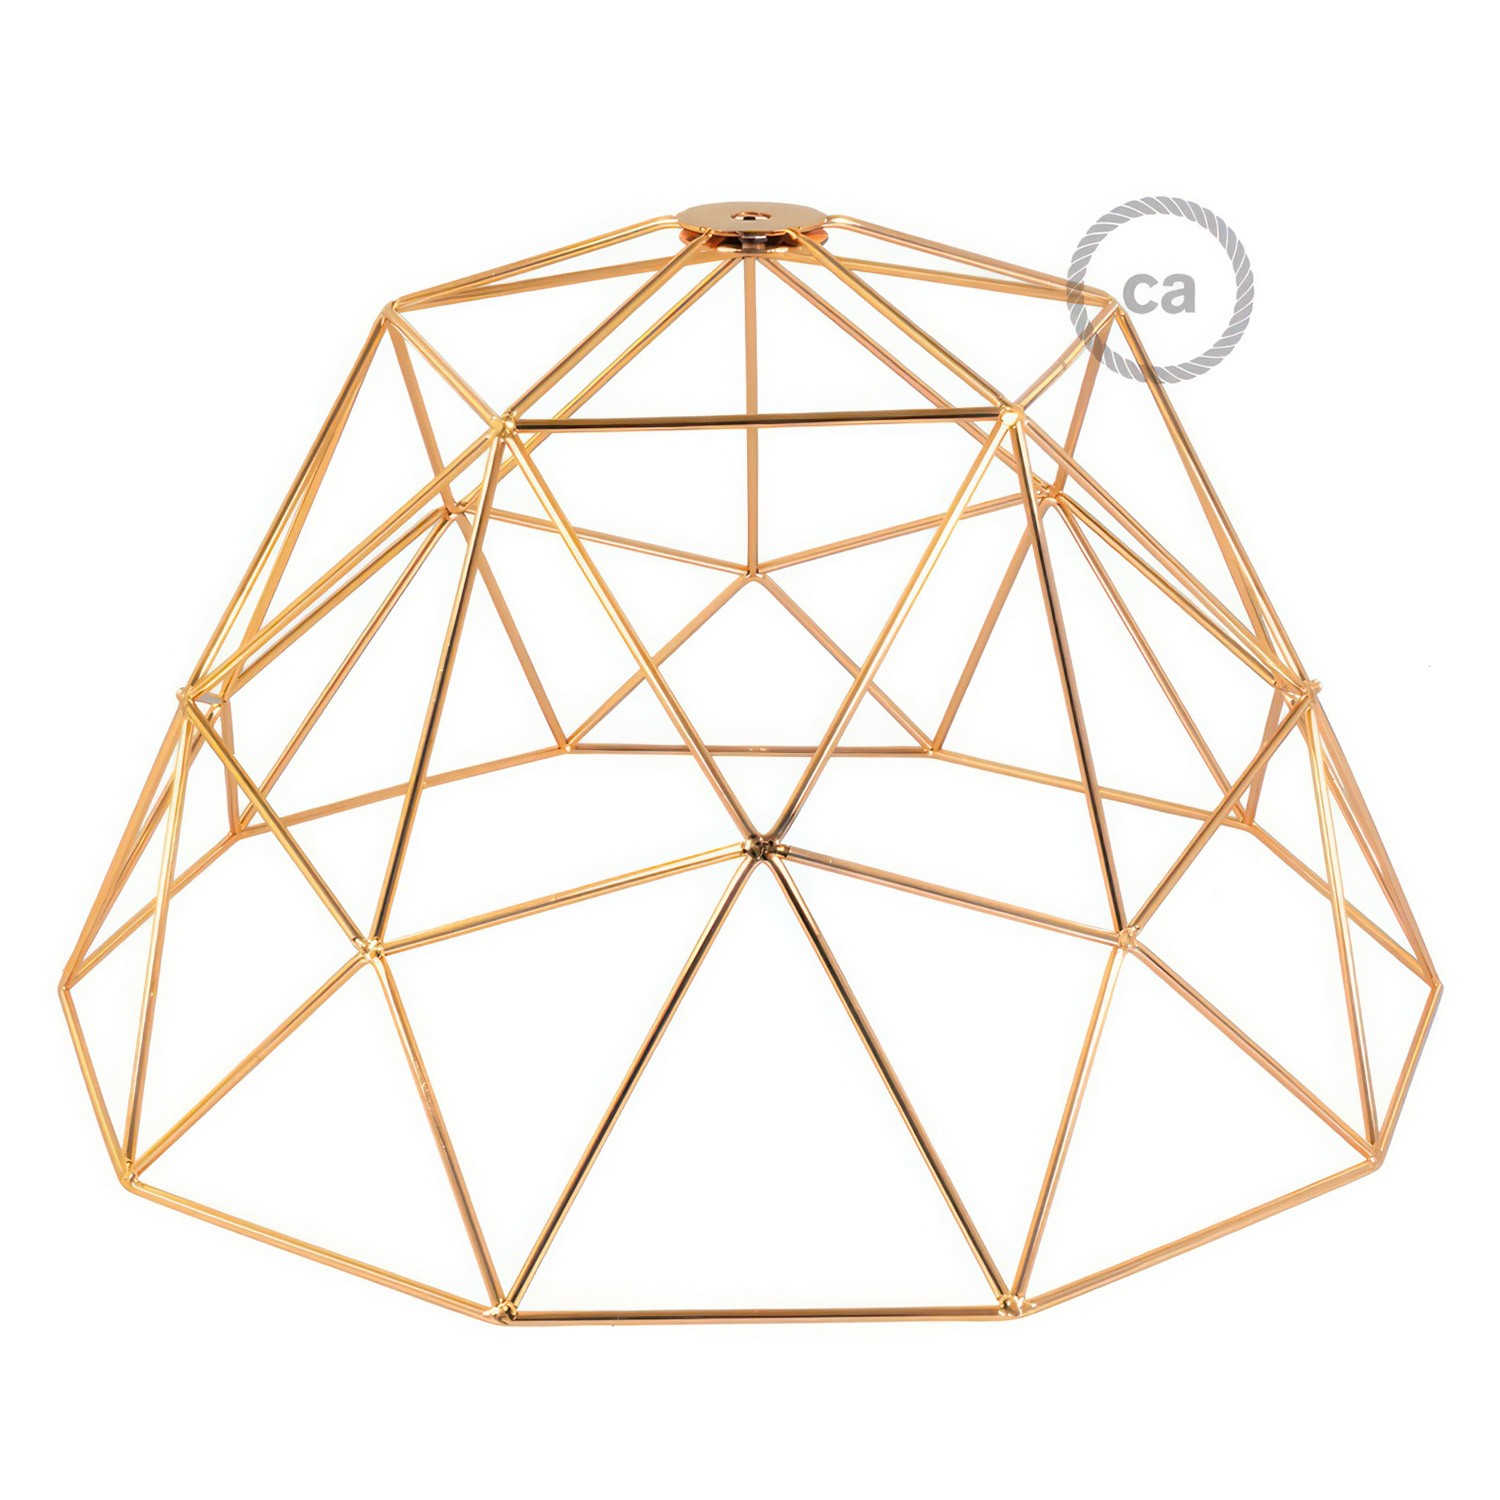 Gabbia XL paralume nudo Dome in metallo con portalampada E27